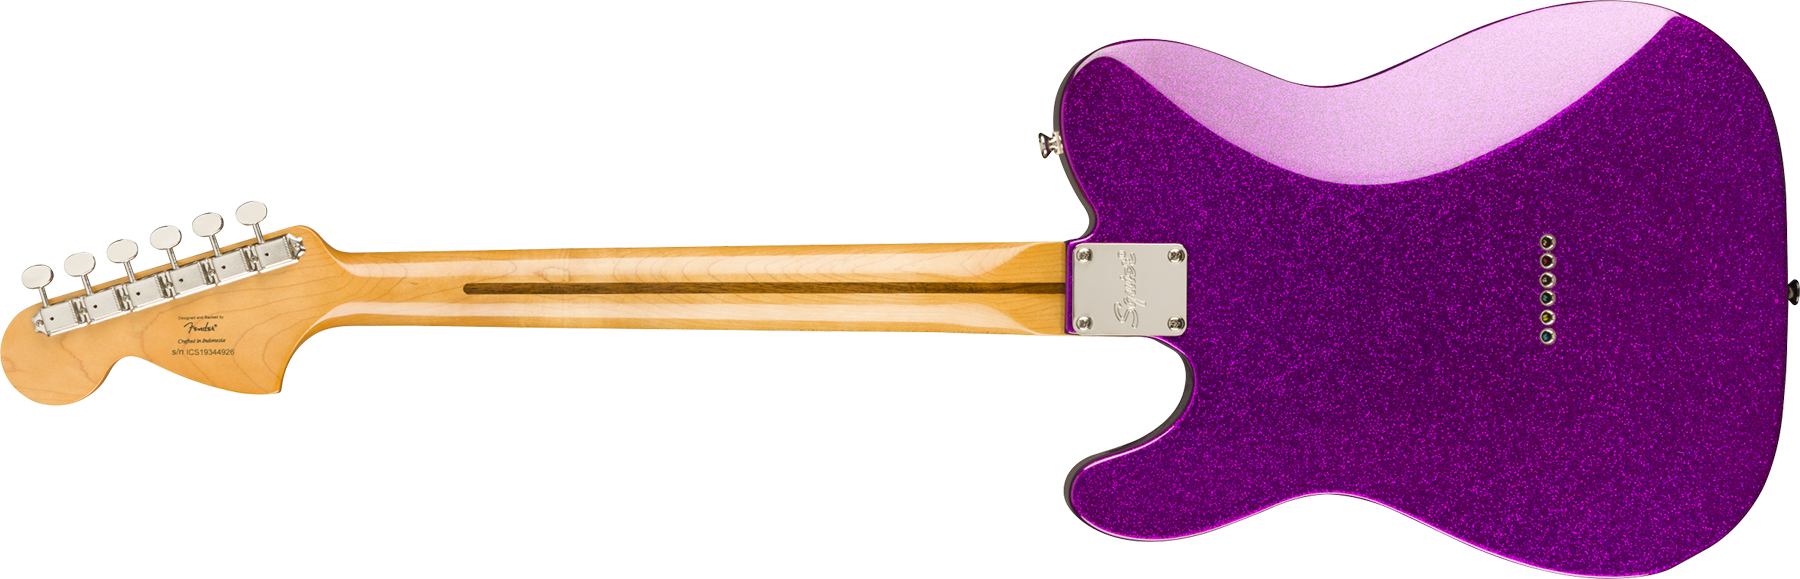 Squier Tele Deluxe Classic Vibe 70 Fsr Ltd 2020 Hh Htmn - Purple Sparkle - E-Gitarre in Teleform - Variation 1